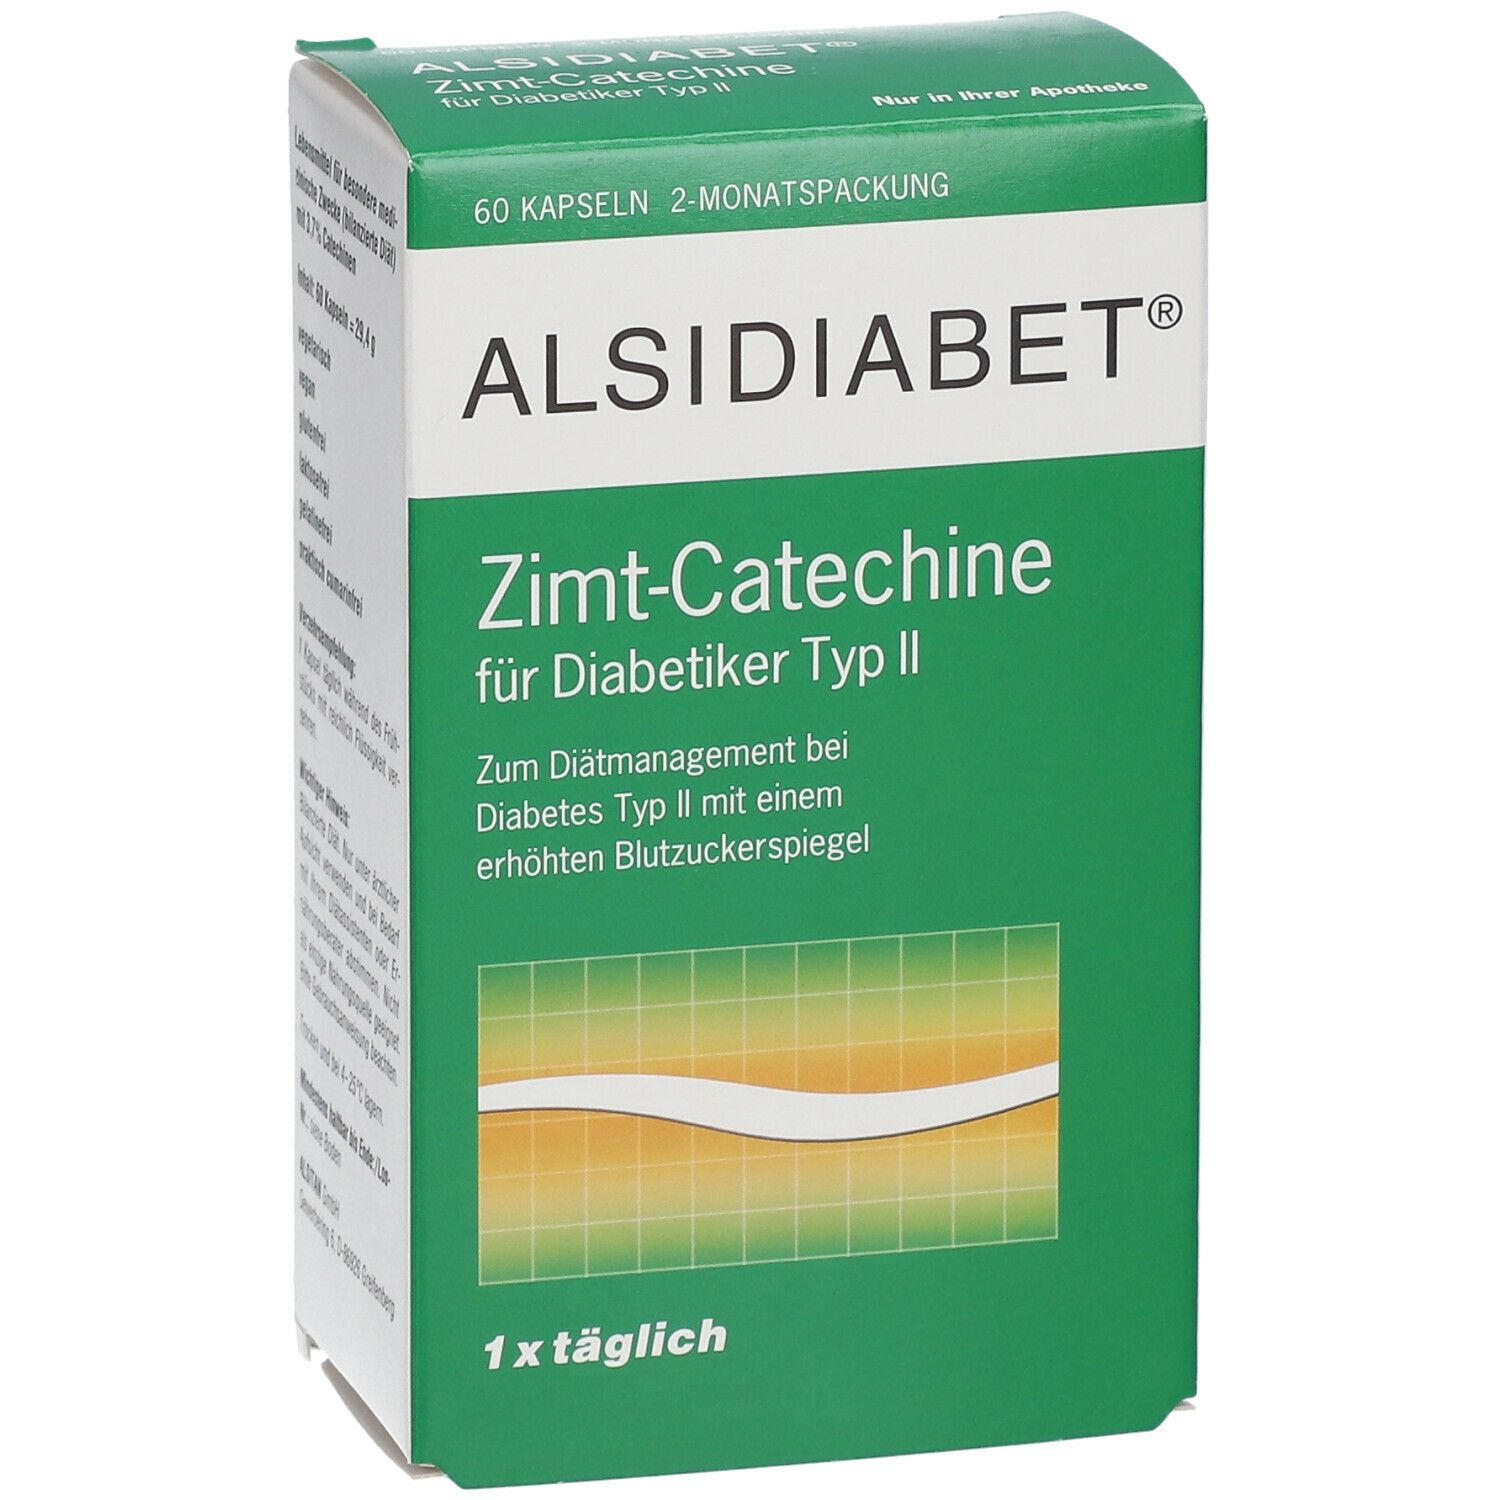 ALSIDIABET® Zimt-Catechine für Diabetiker Typ II